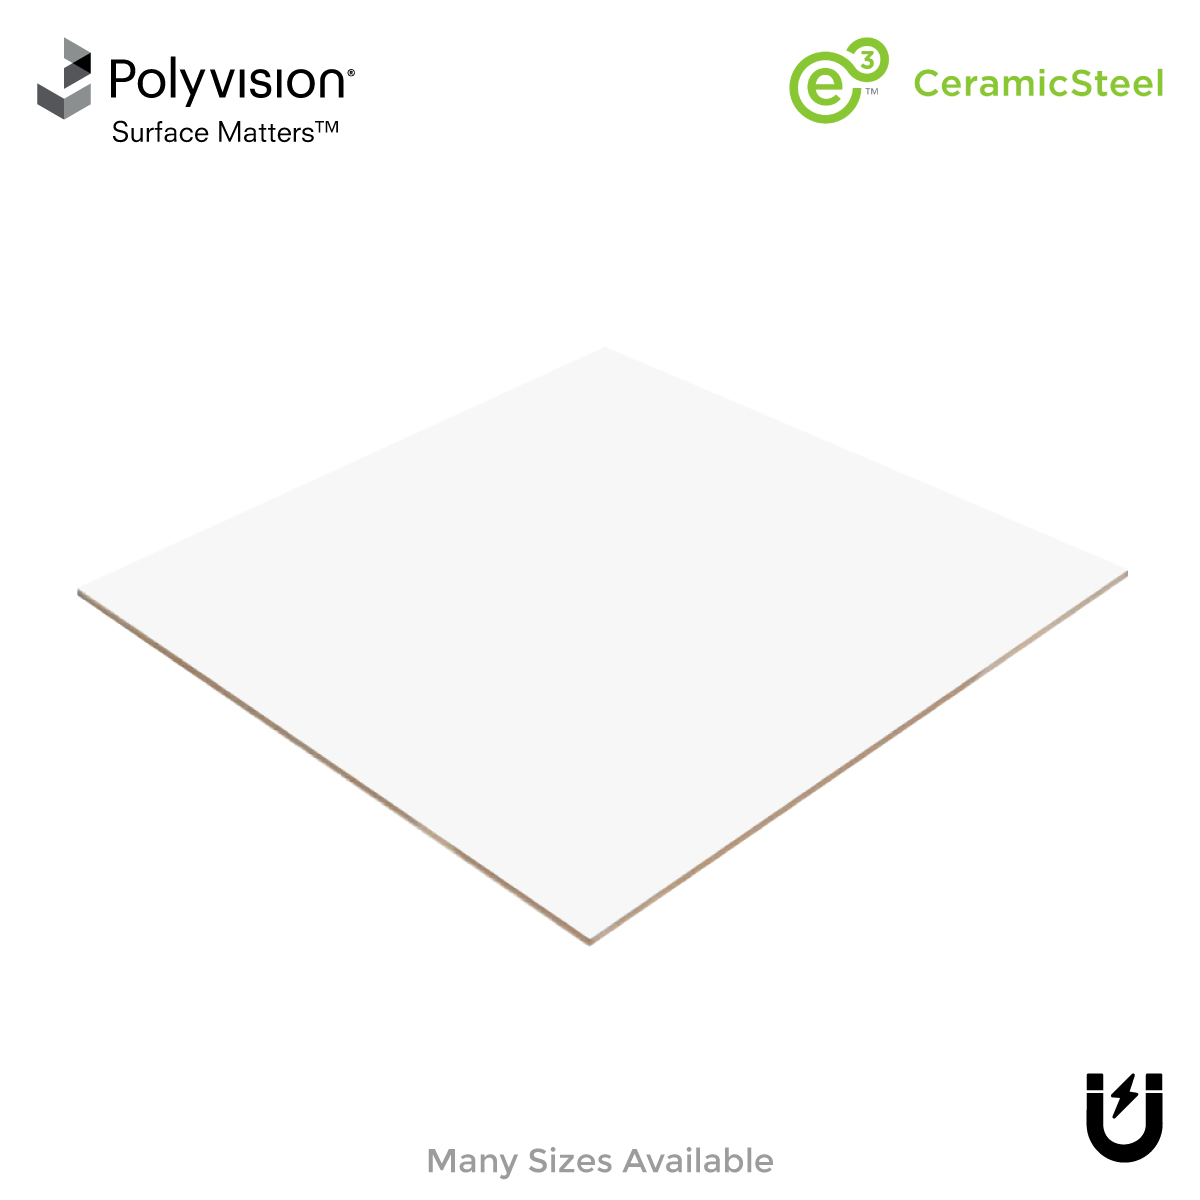 CeramicSteel vs. Whiteboard Paint Comparison - Polyvision